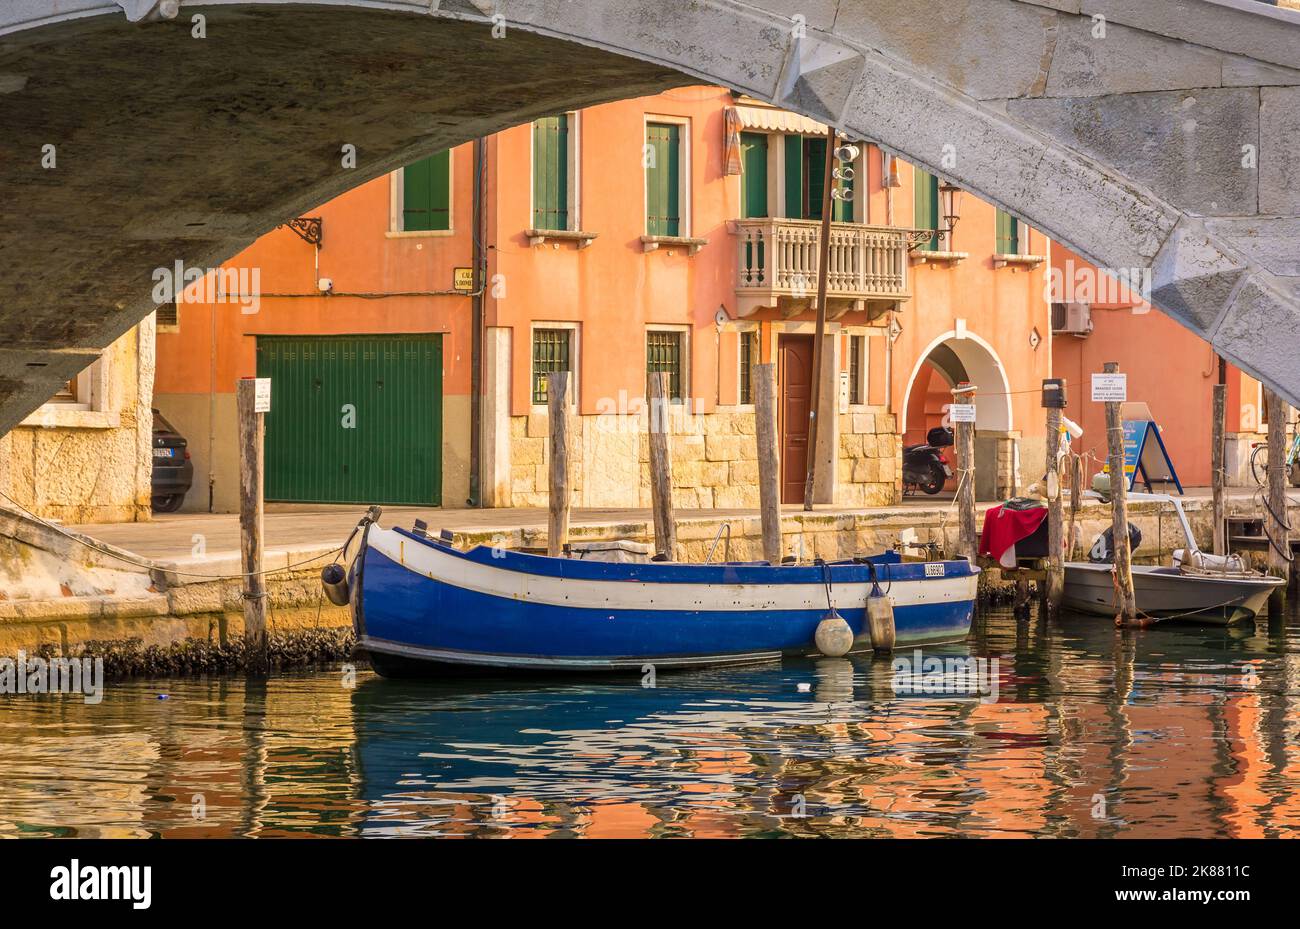 old blue wooden boat in the canal Chioggia city, little Venice, Veneto region, northern italy - Europe - glimpse of Chioggia city Stock Photo